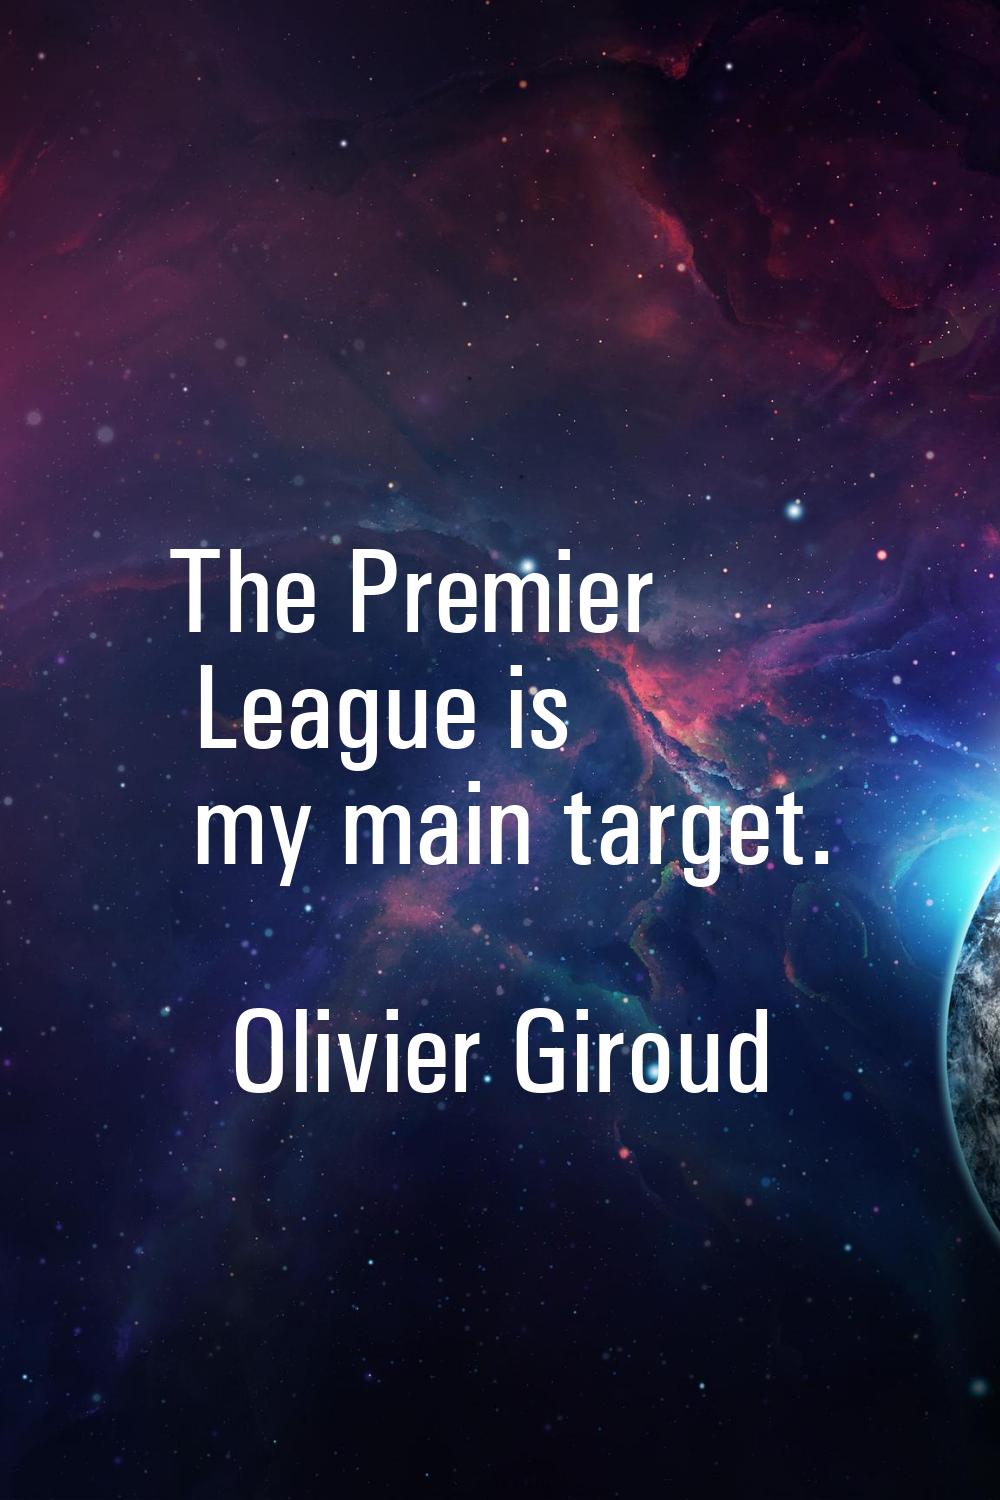 The Premier League is my main target.